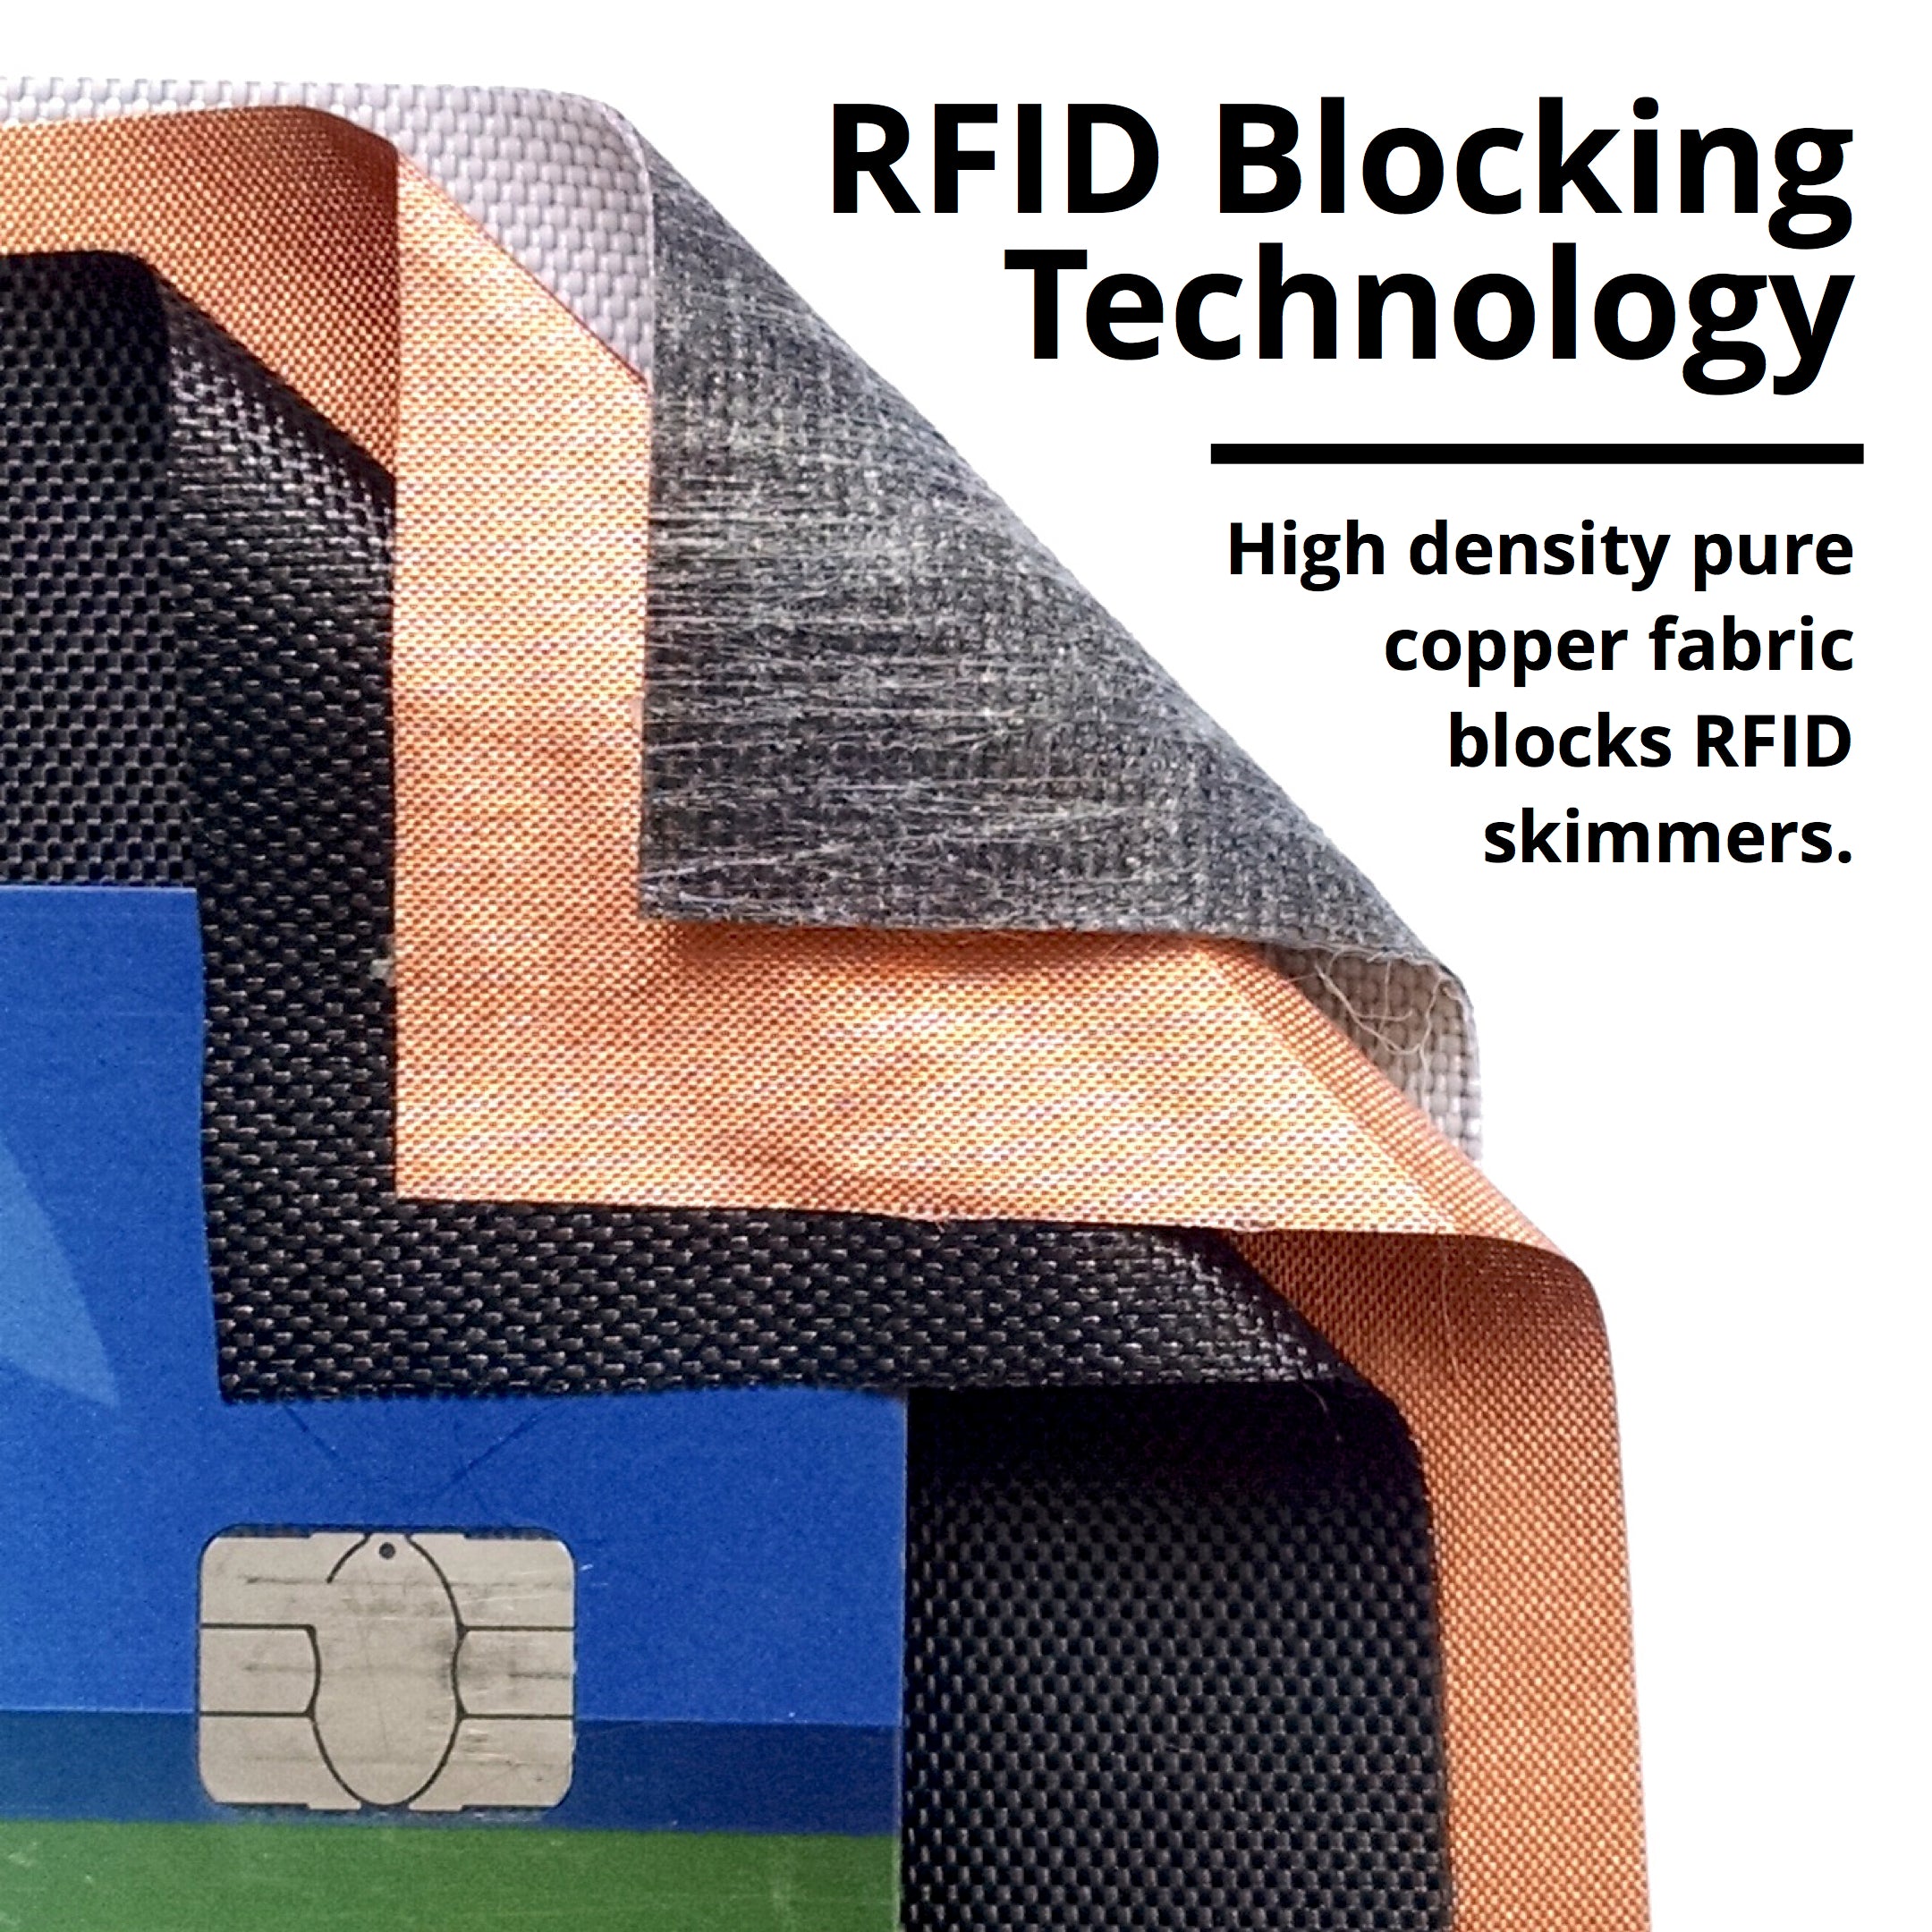 How RFID blocking works - RFID Cloaked - RFID Blocking